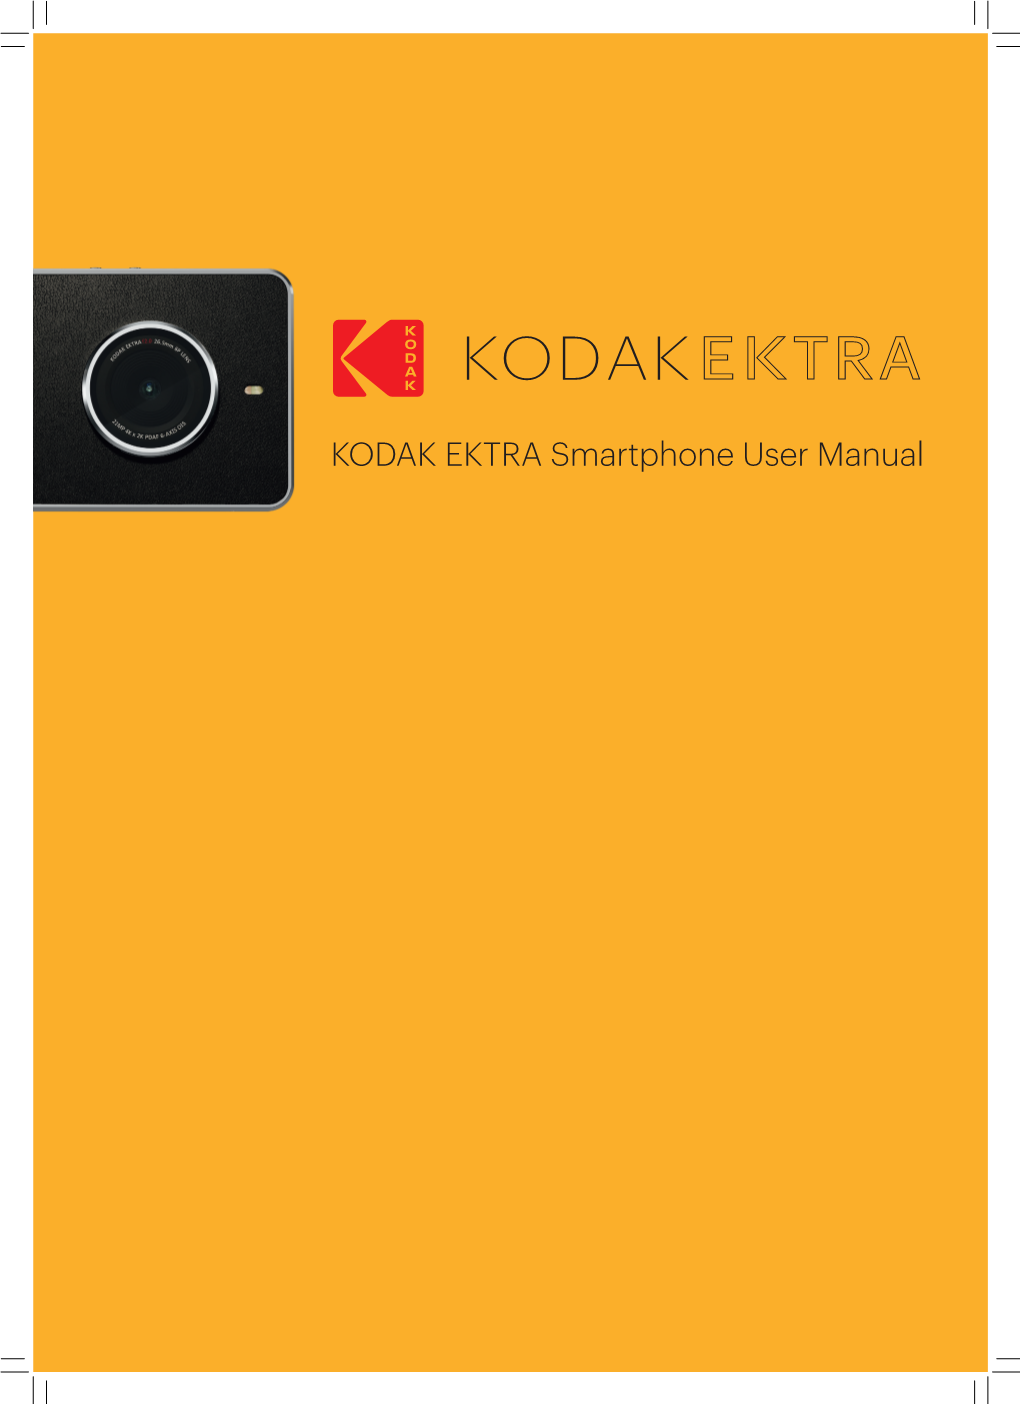 KODAK EKTRA Smartphone User Manual